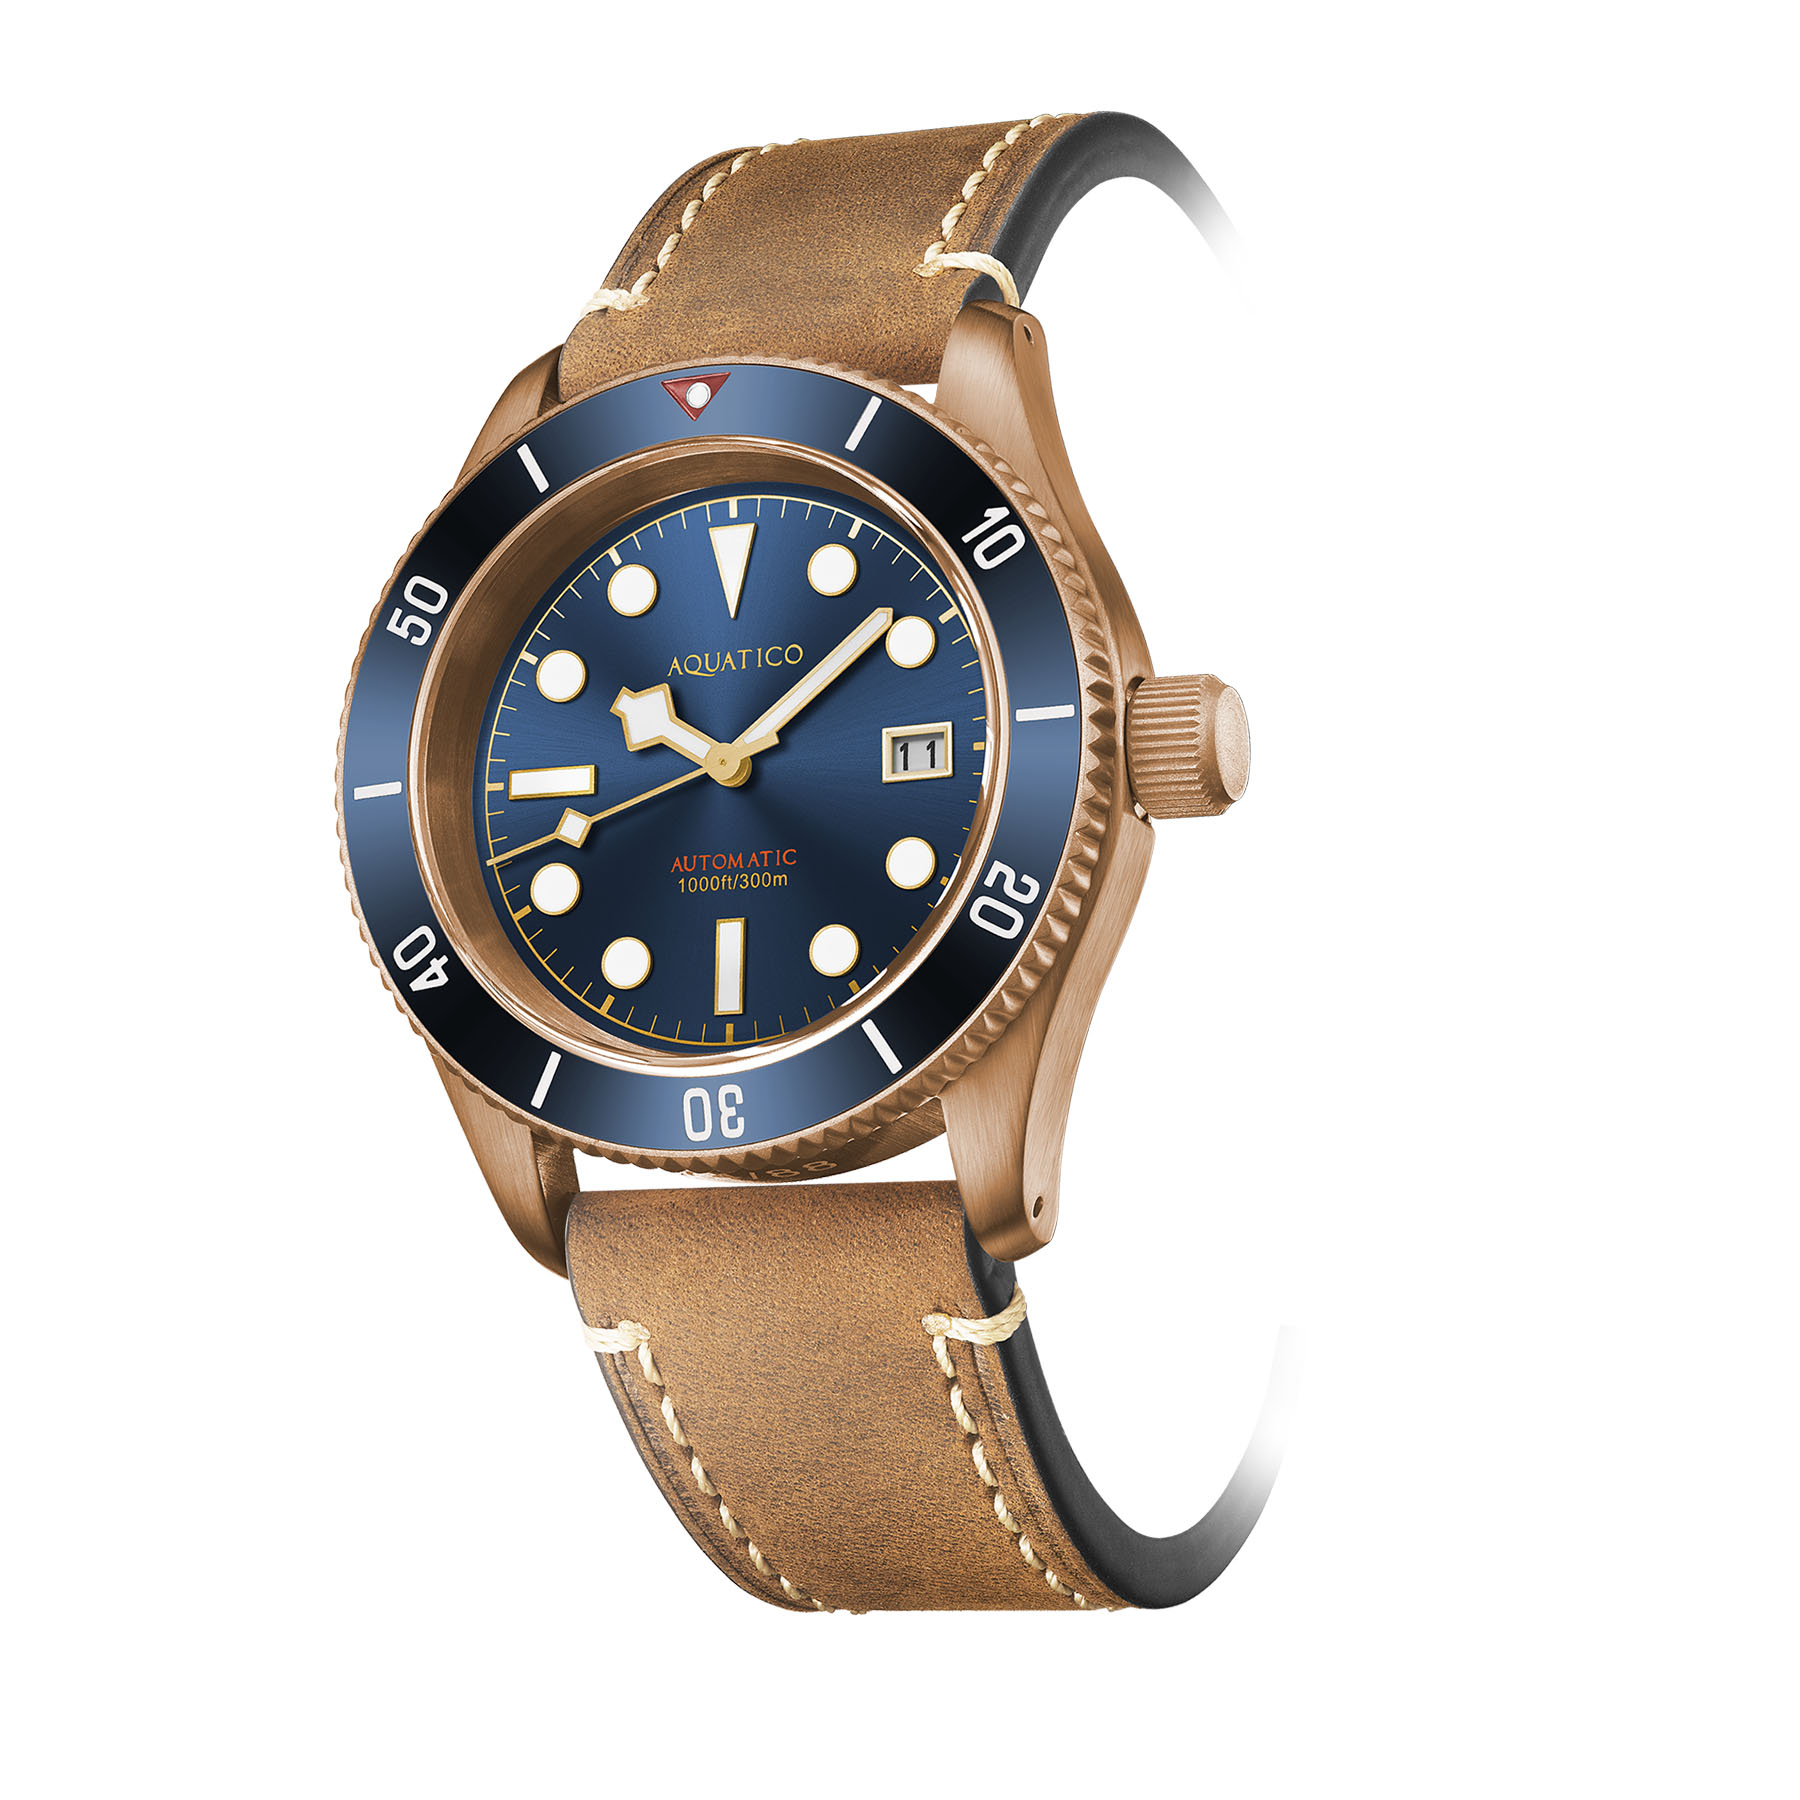 Aquatico Bronze Sea Star Automatic Men's Watch Bronze Case/Blue Dial/Blue Bezel